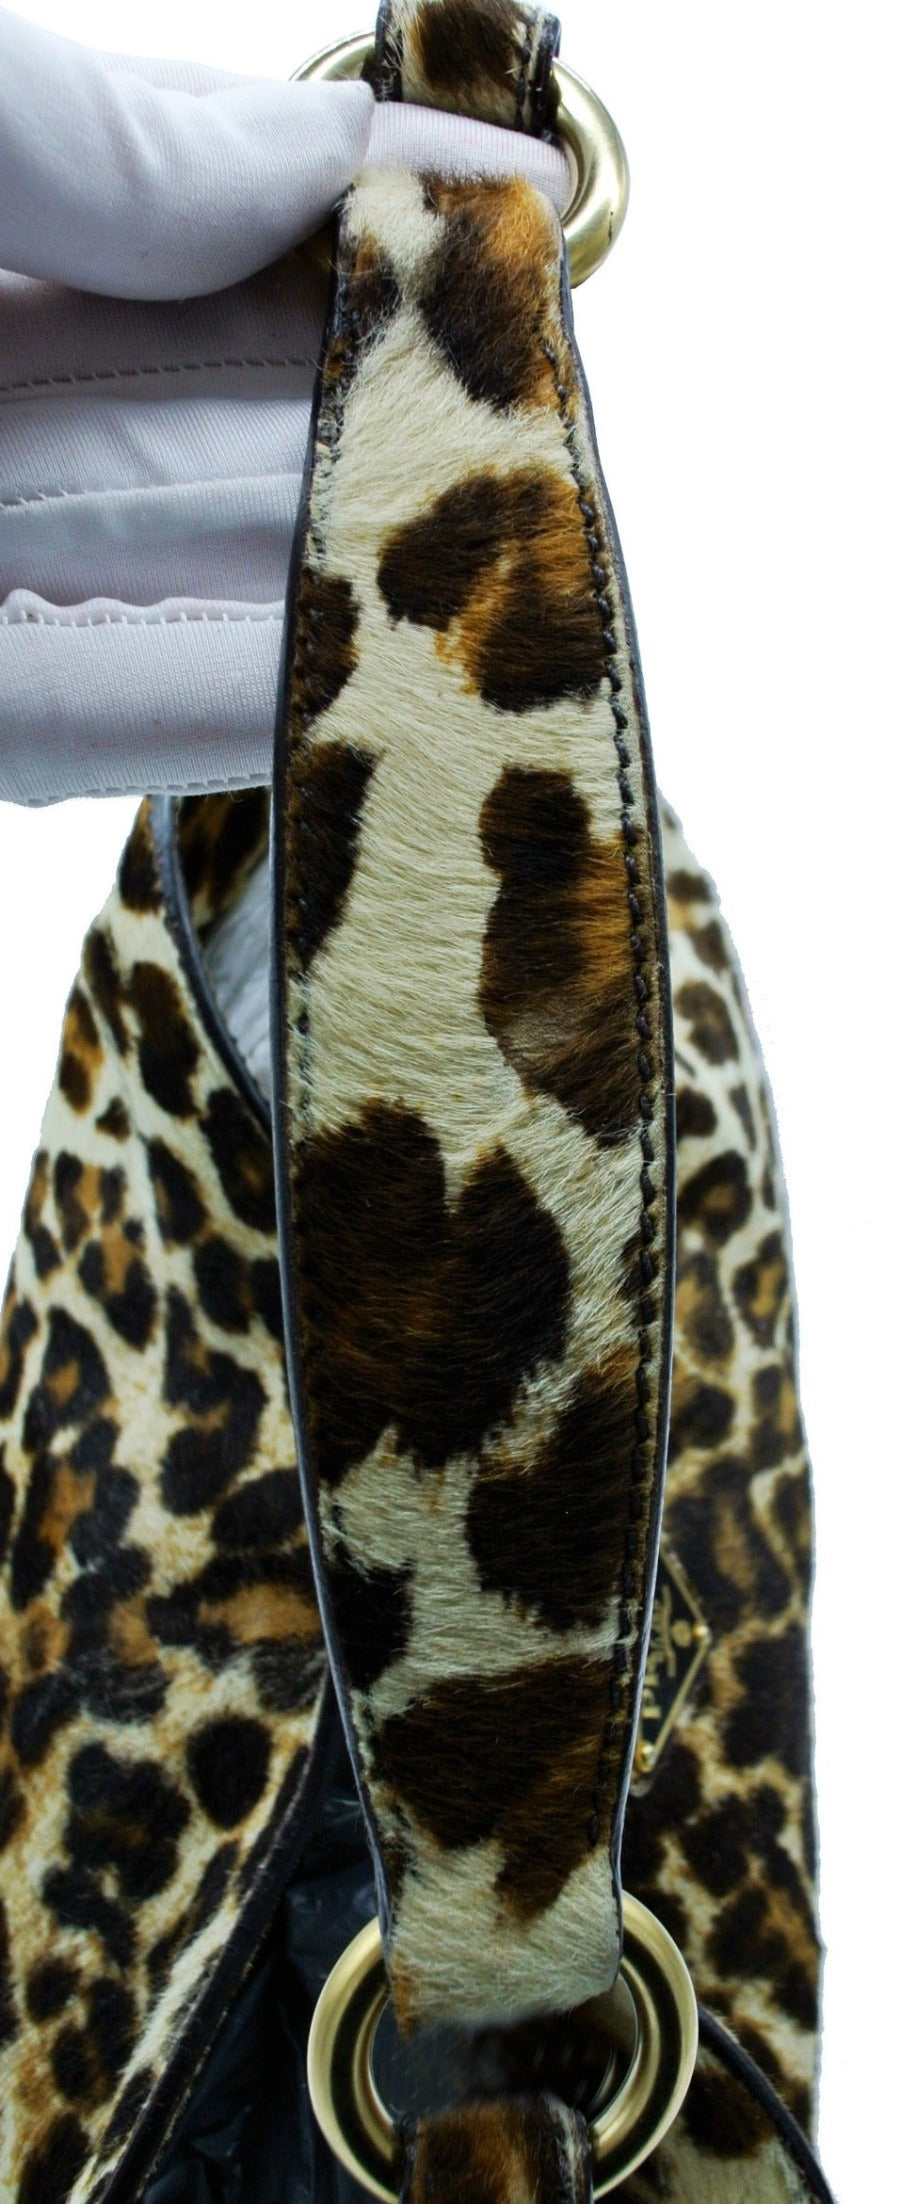 Vintage Prada Pattina Sottospalla Cavallino Shoulder Bag in Leopard Print